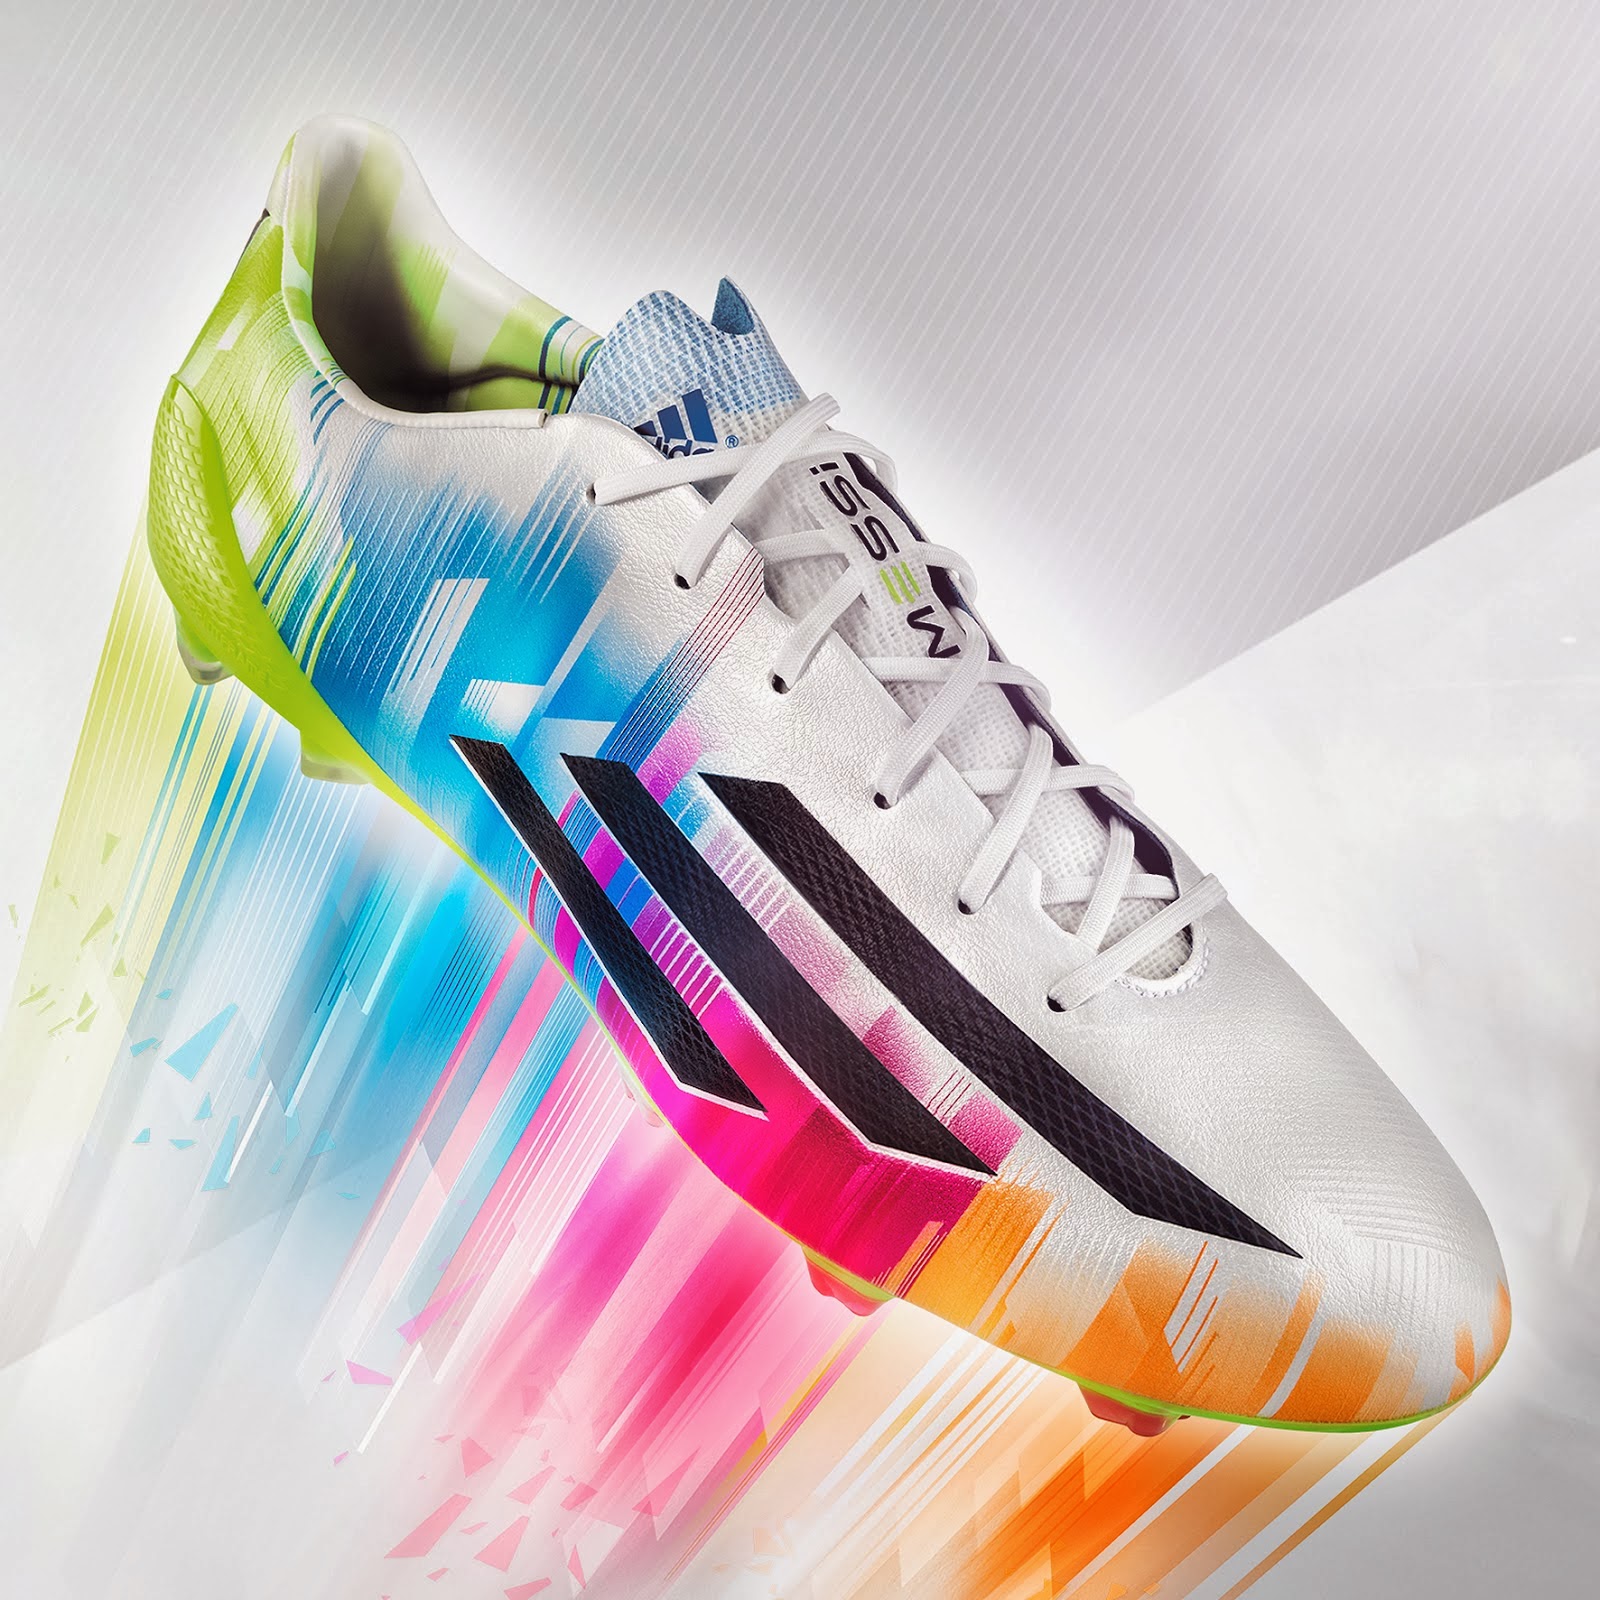 Adidas Launch New Adizerotm F50 Messi Boots C A T